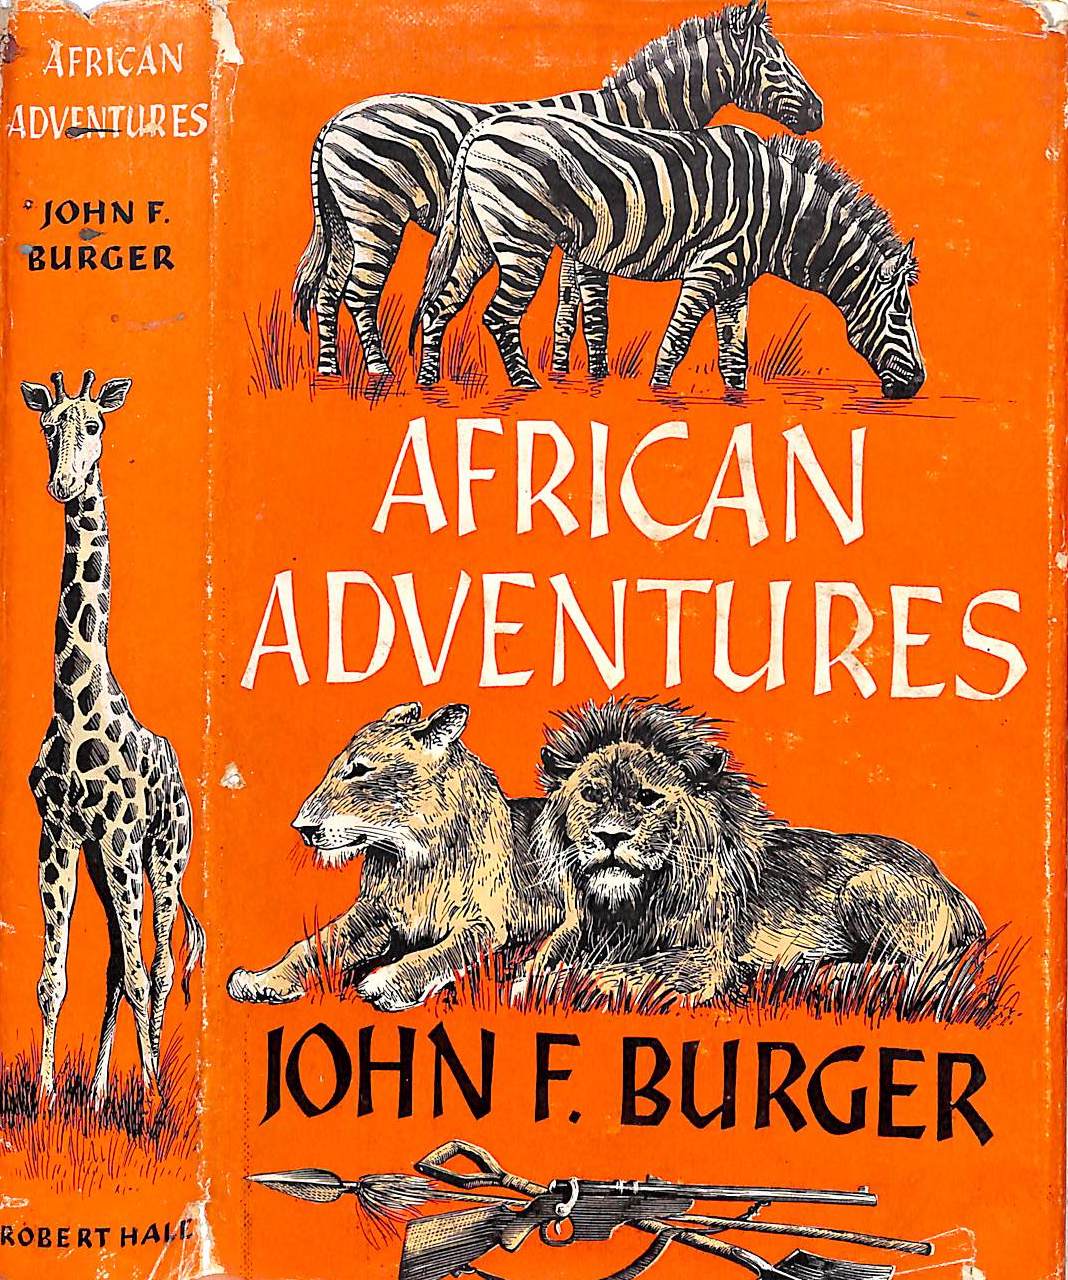 "African Adventures" 1957 BURGER, John F.